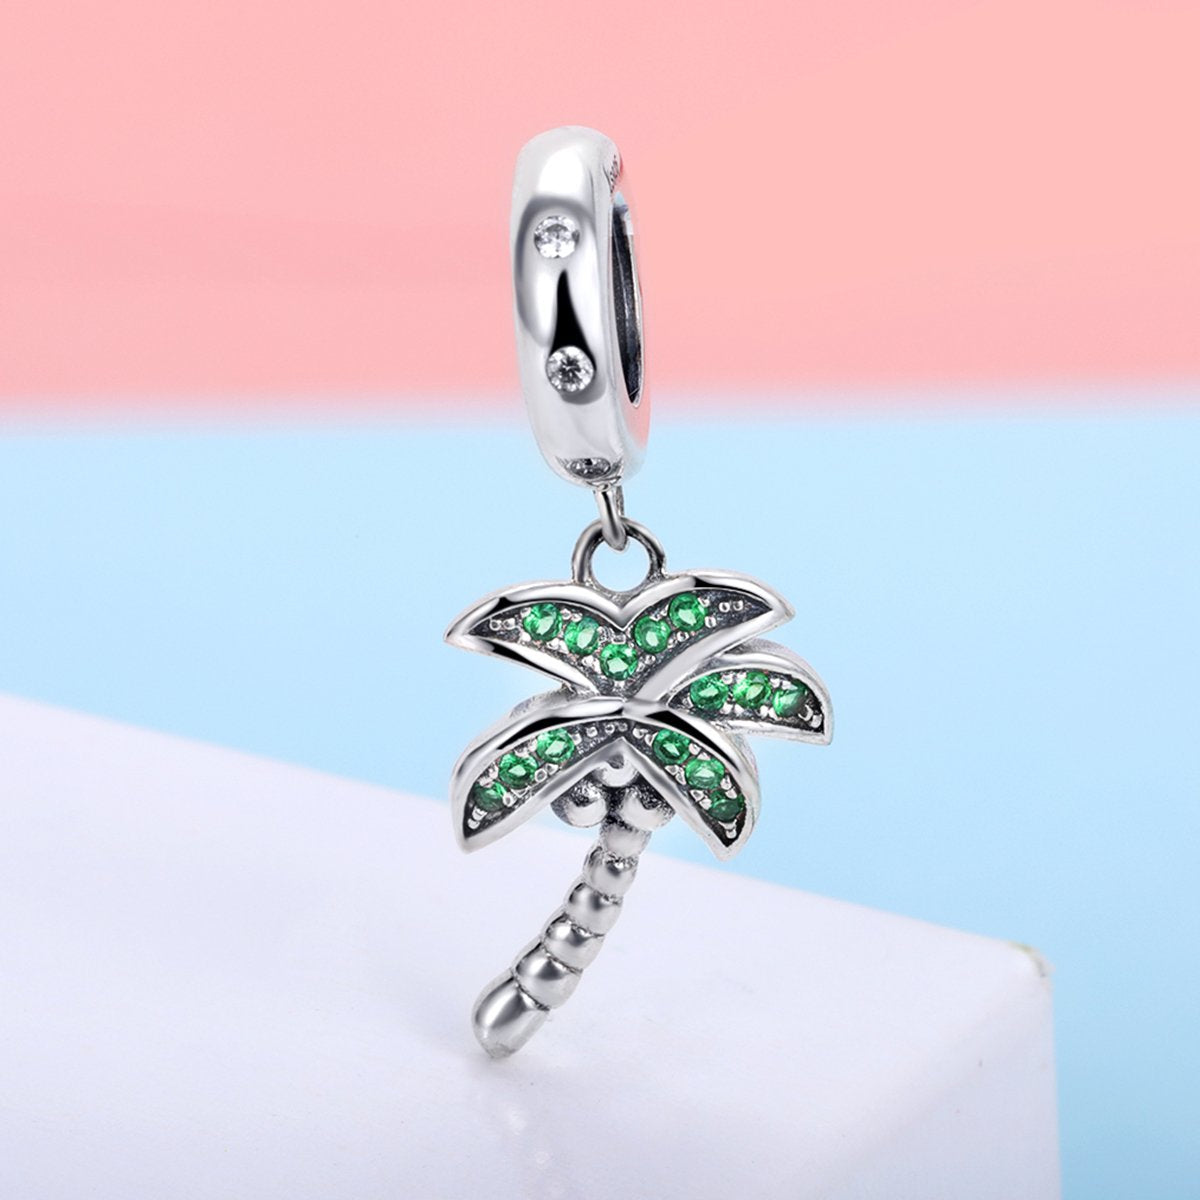 Sterling 925 silver charm the green palm tree fits Pandora charm and European charm bracelet Xaxe.com